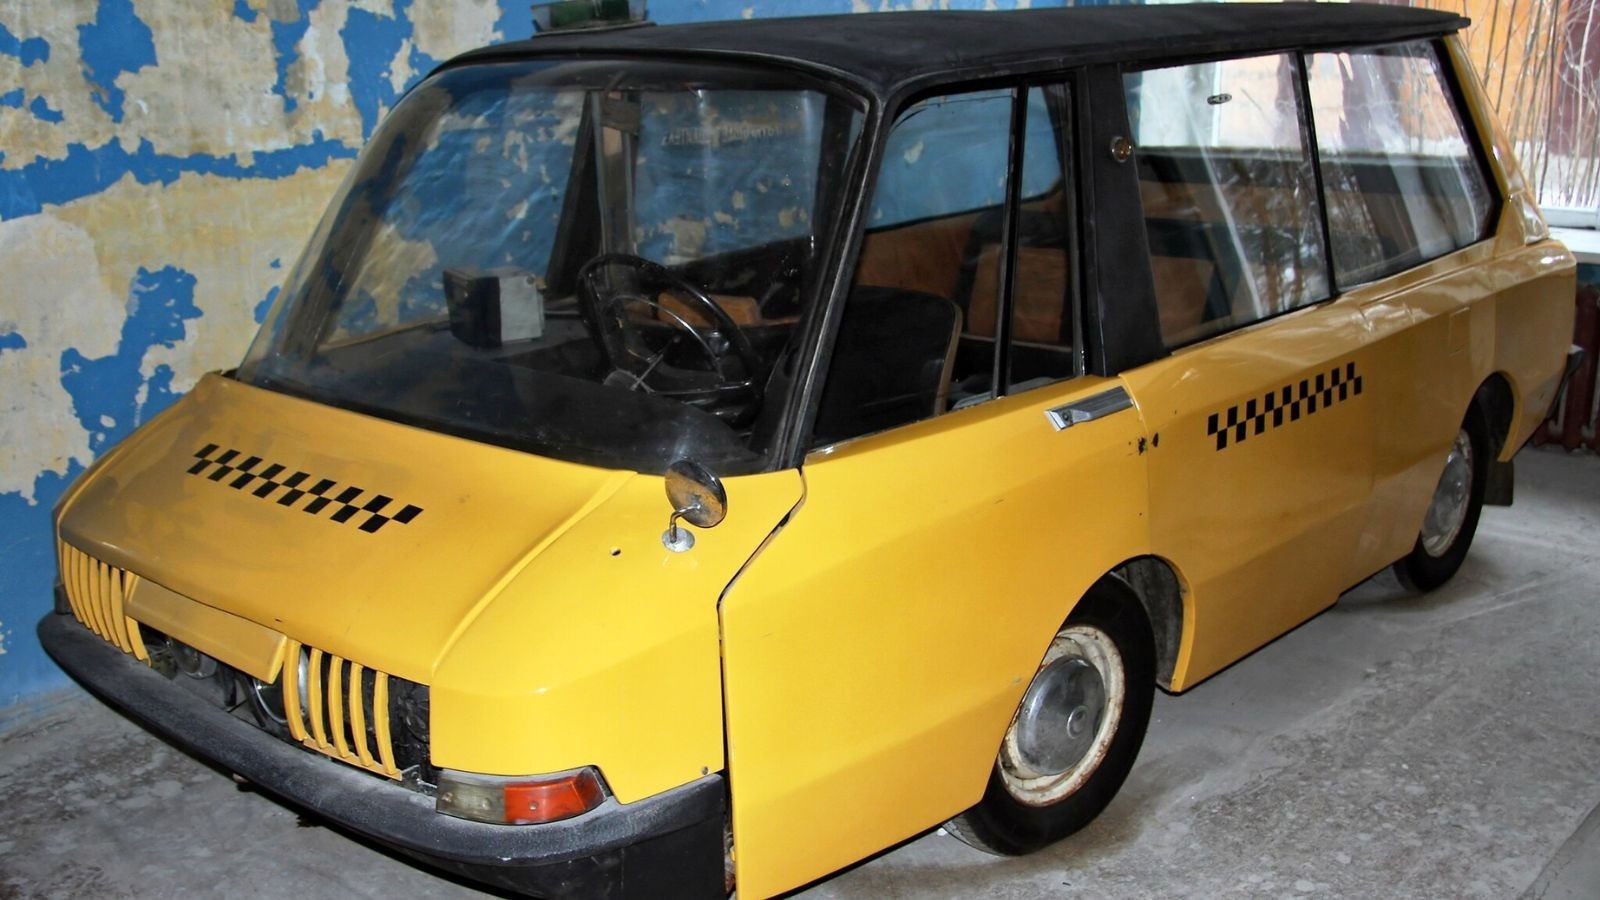 VNIITE-PT شوروی یکی از عجیب ترین تاکسی هایی است که تا به حال دیده اید